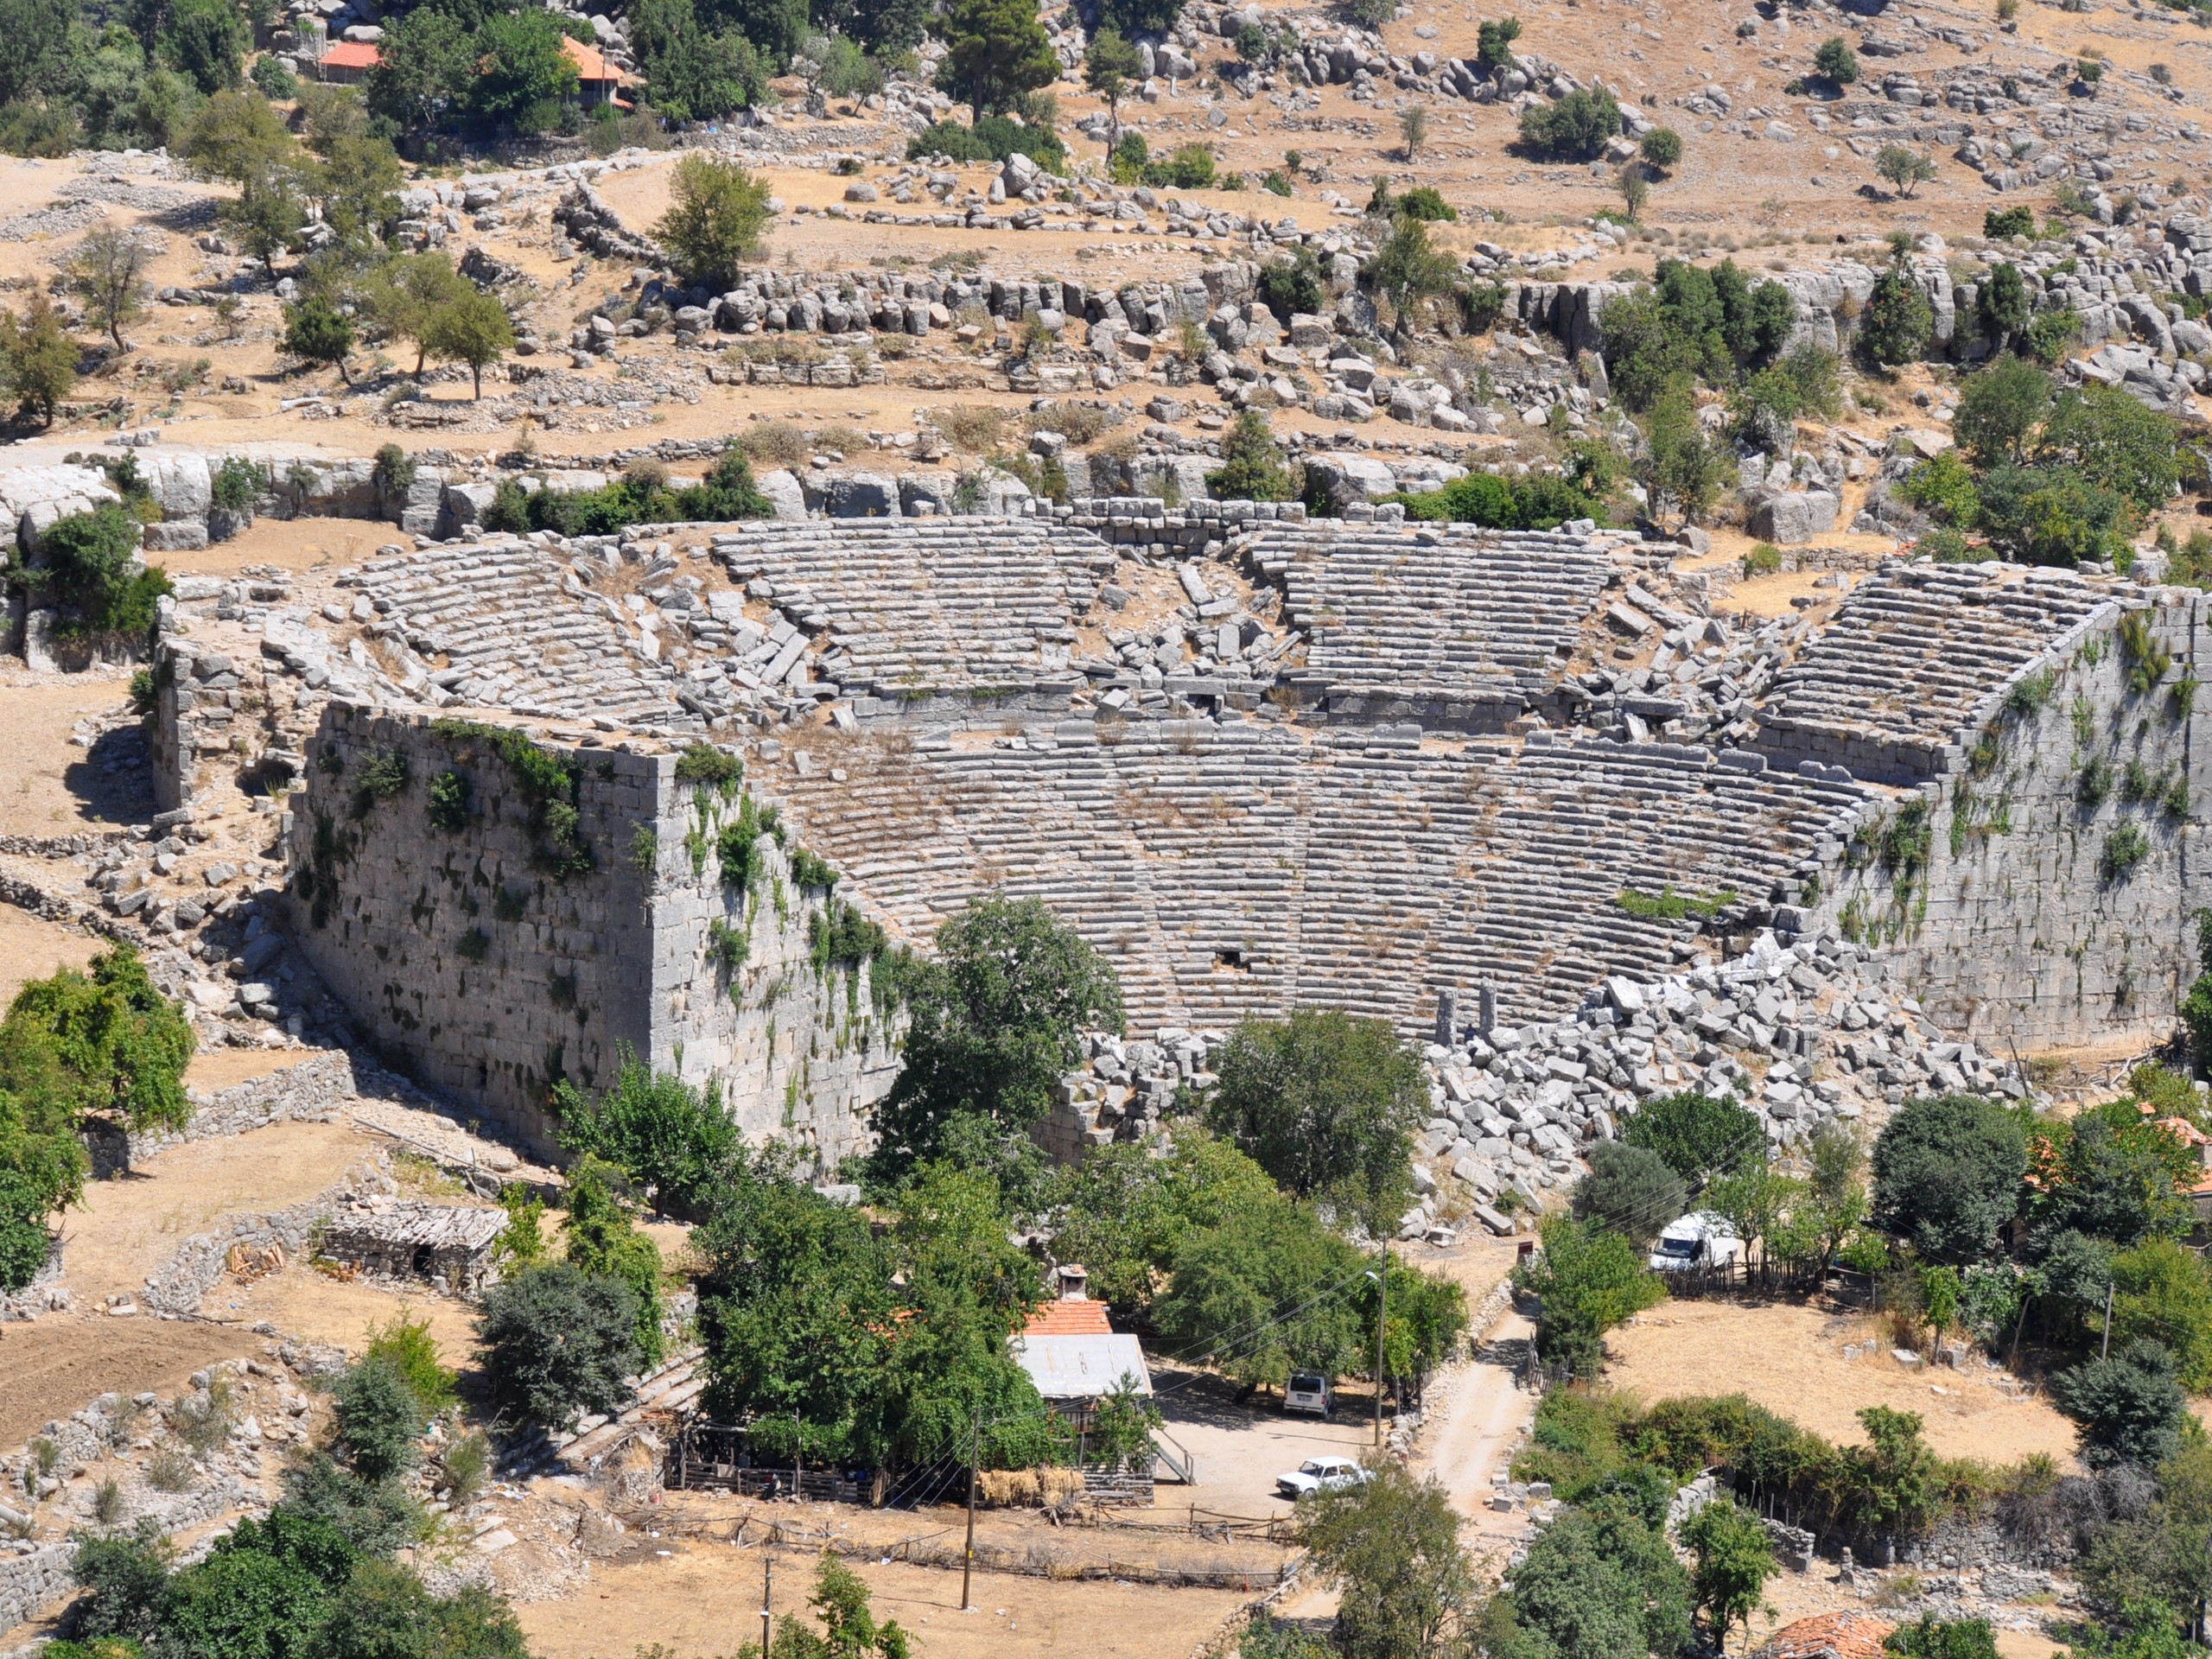 Selge theatre in Turkey, seen along the St Paul Trail